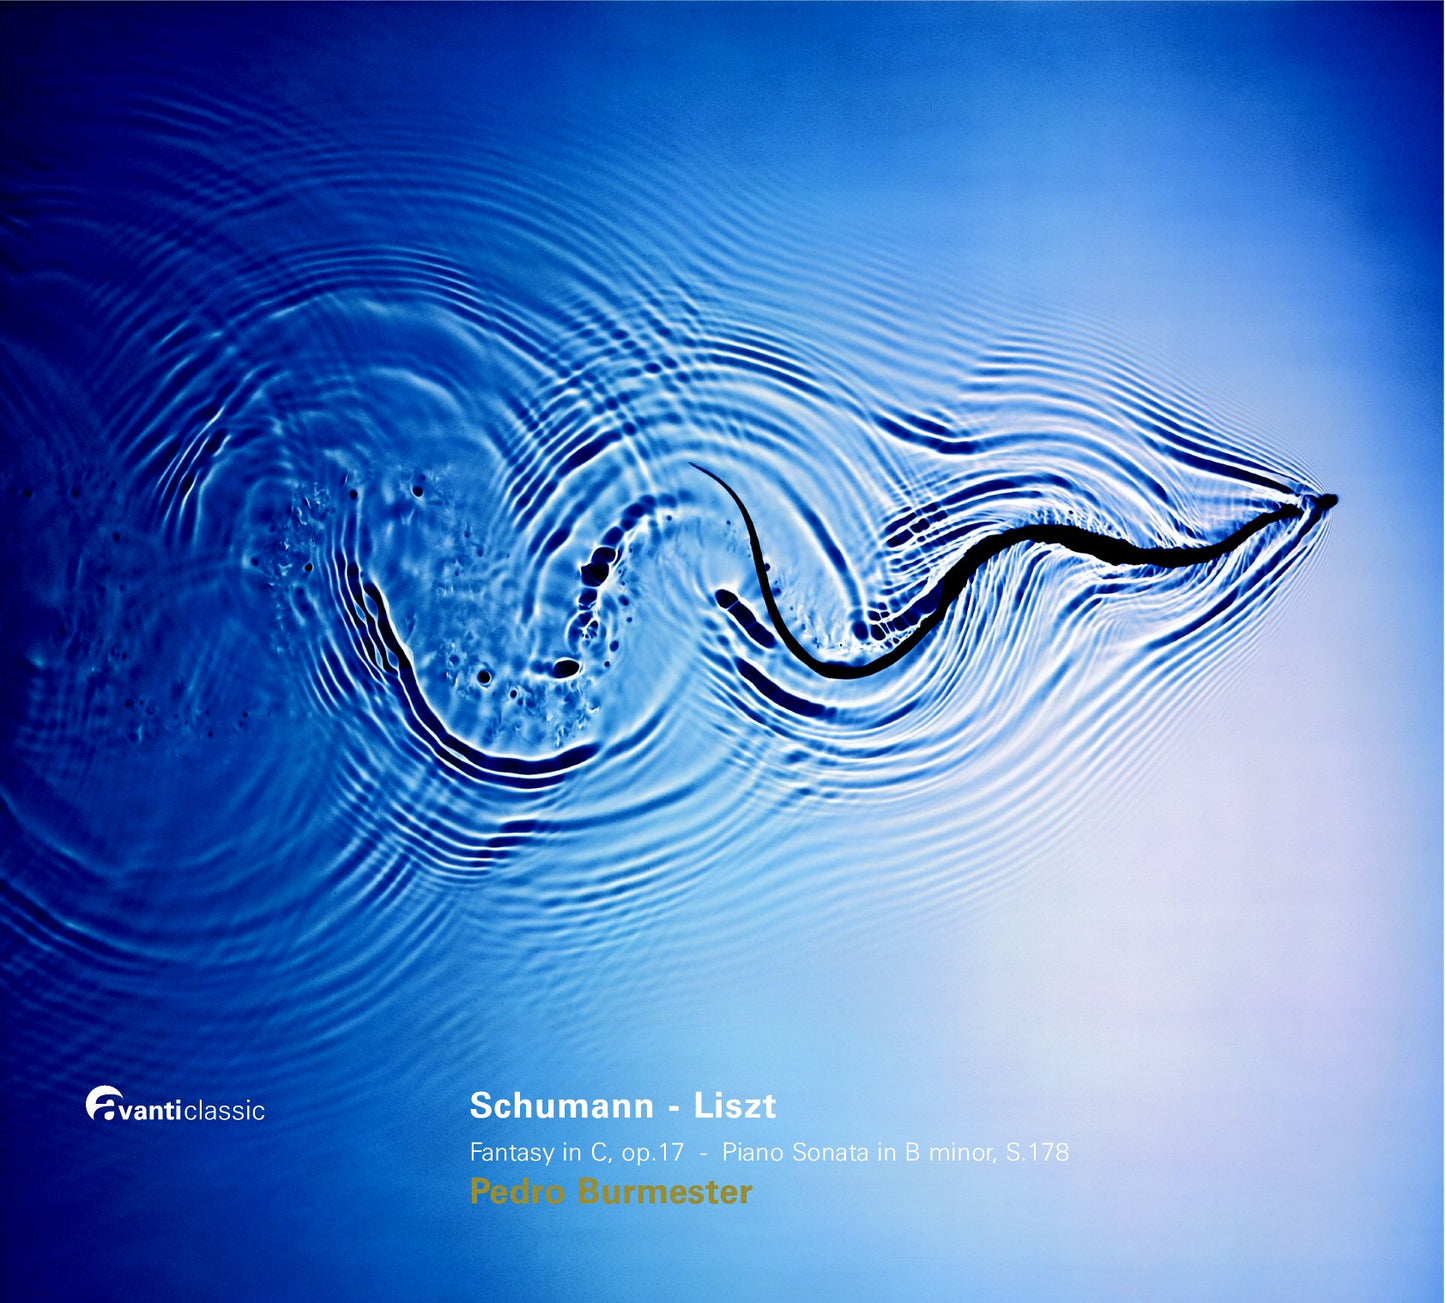 Recital Schumann • Liszt – Pedro Burmester (1 Hybrid SACD)